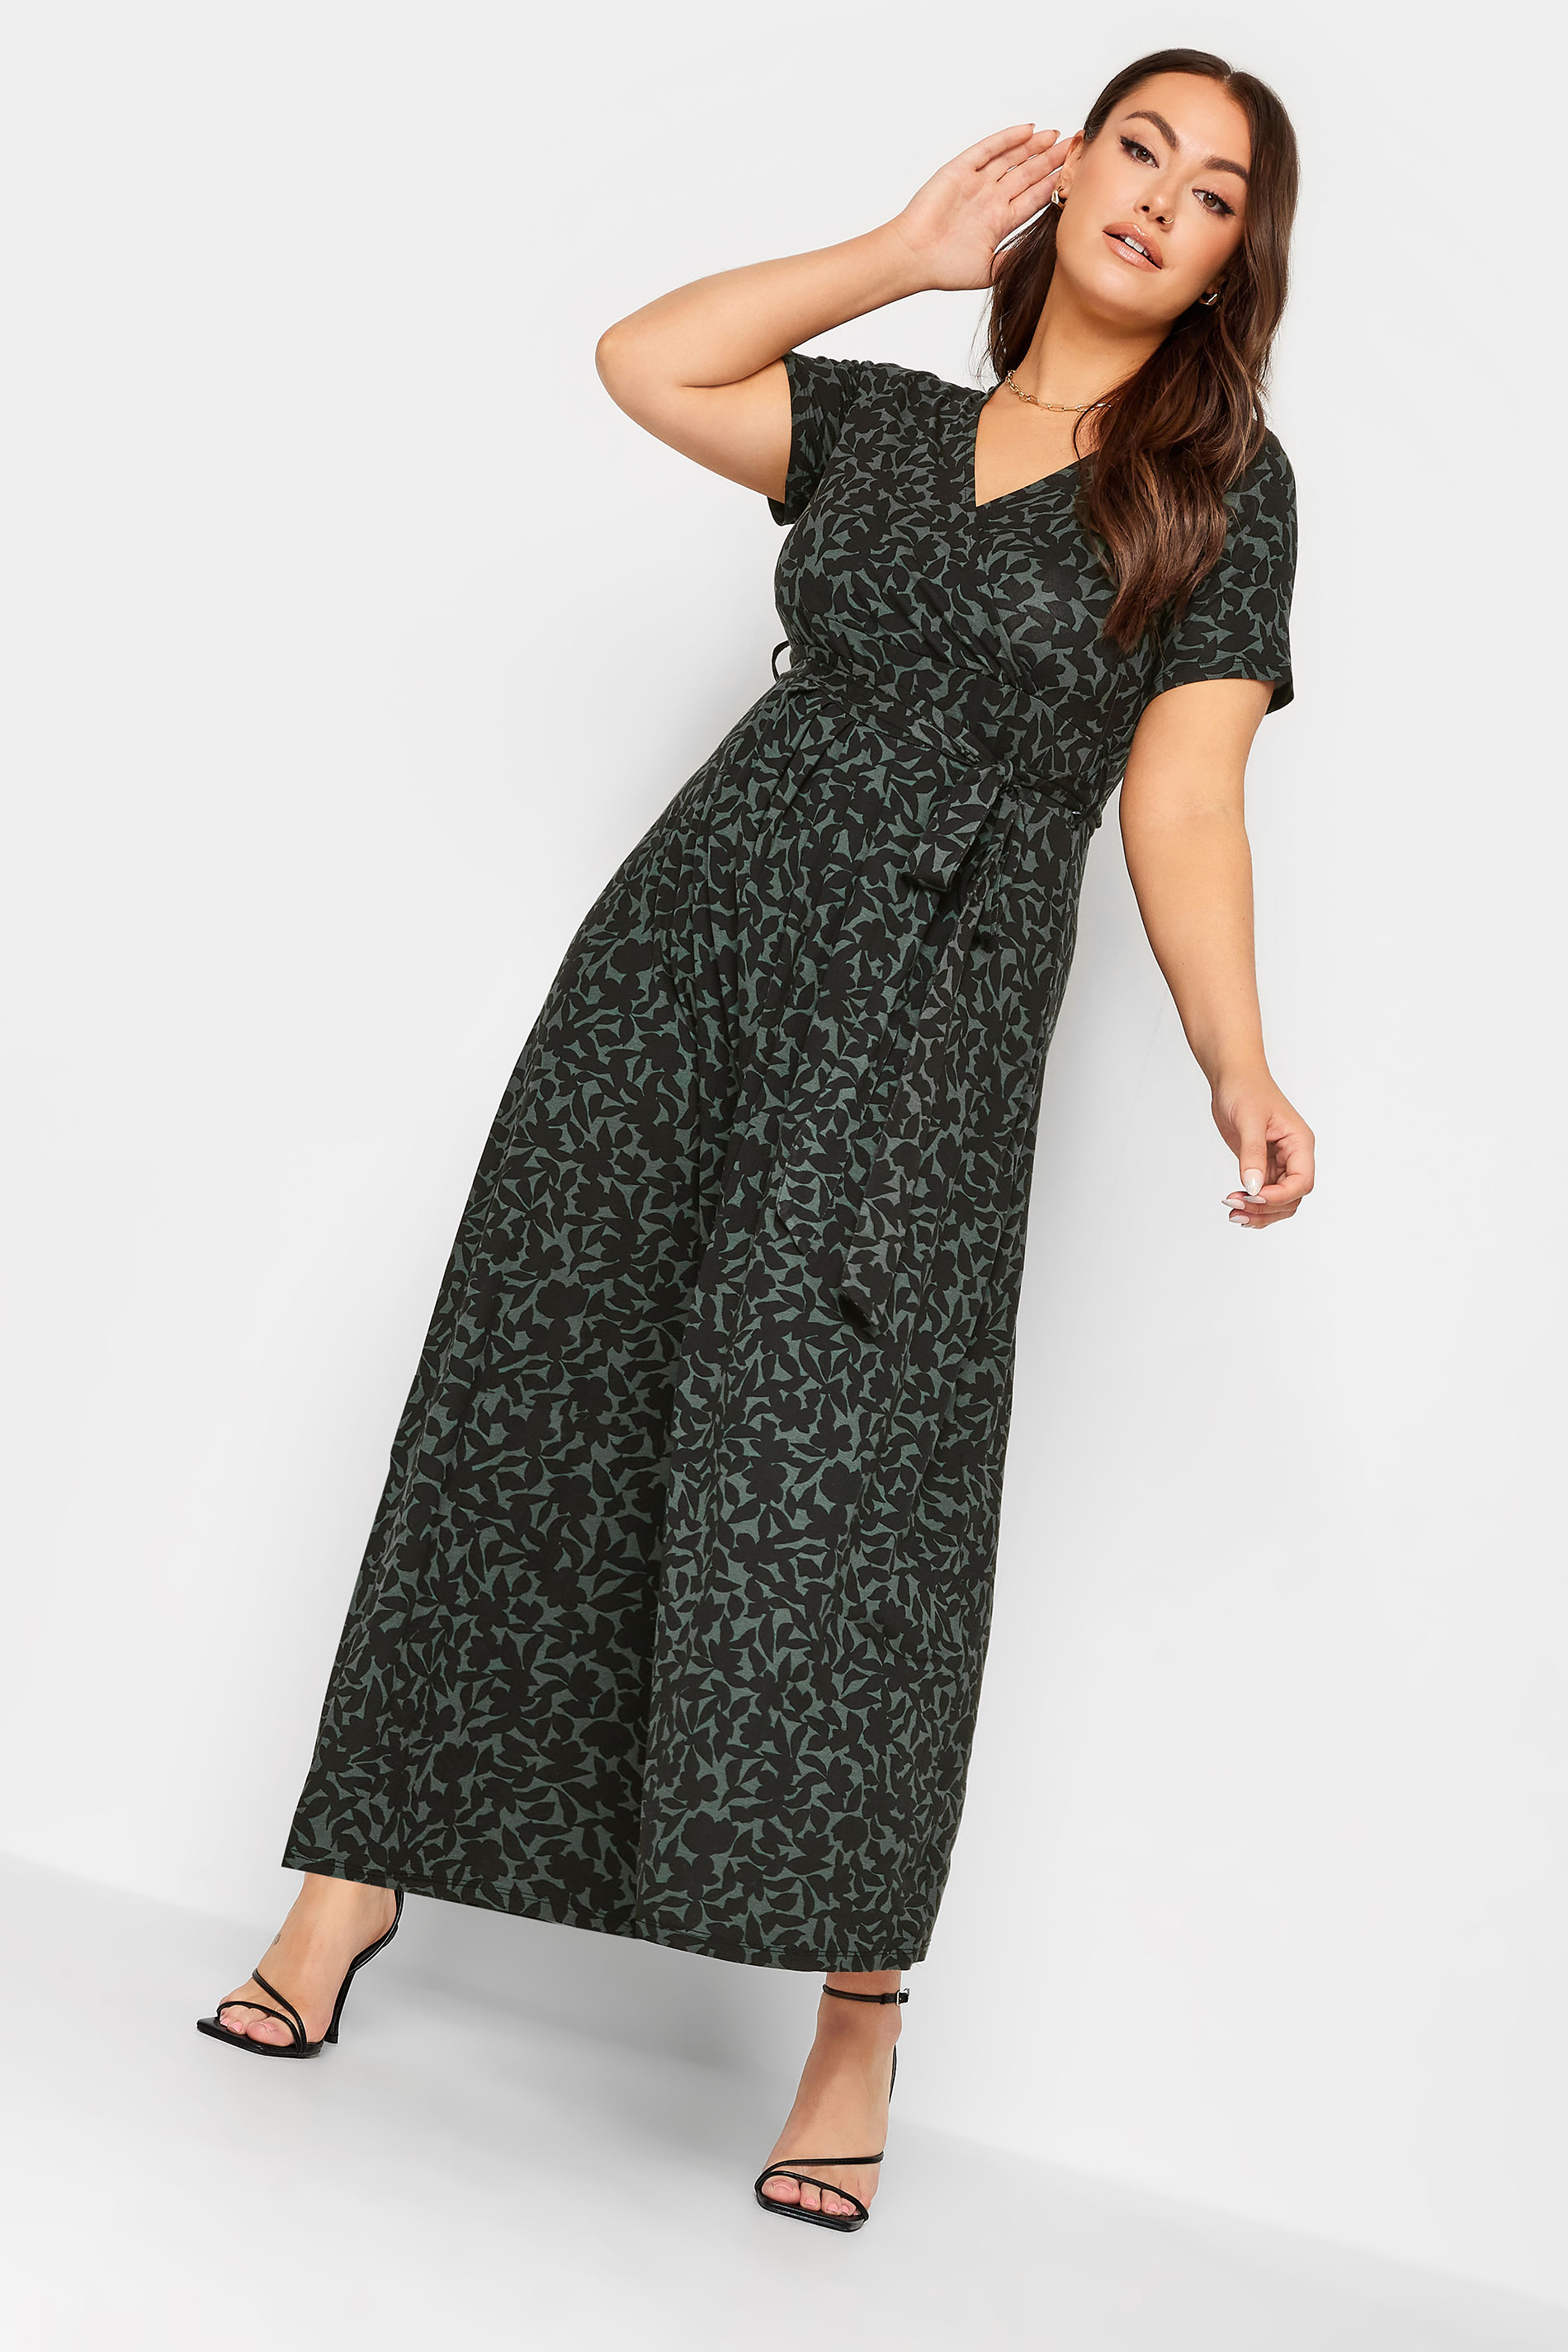 YOURS Plus Size Khaki Green Floral Print Wrap Maxi Dress | Yours Clothing 1